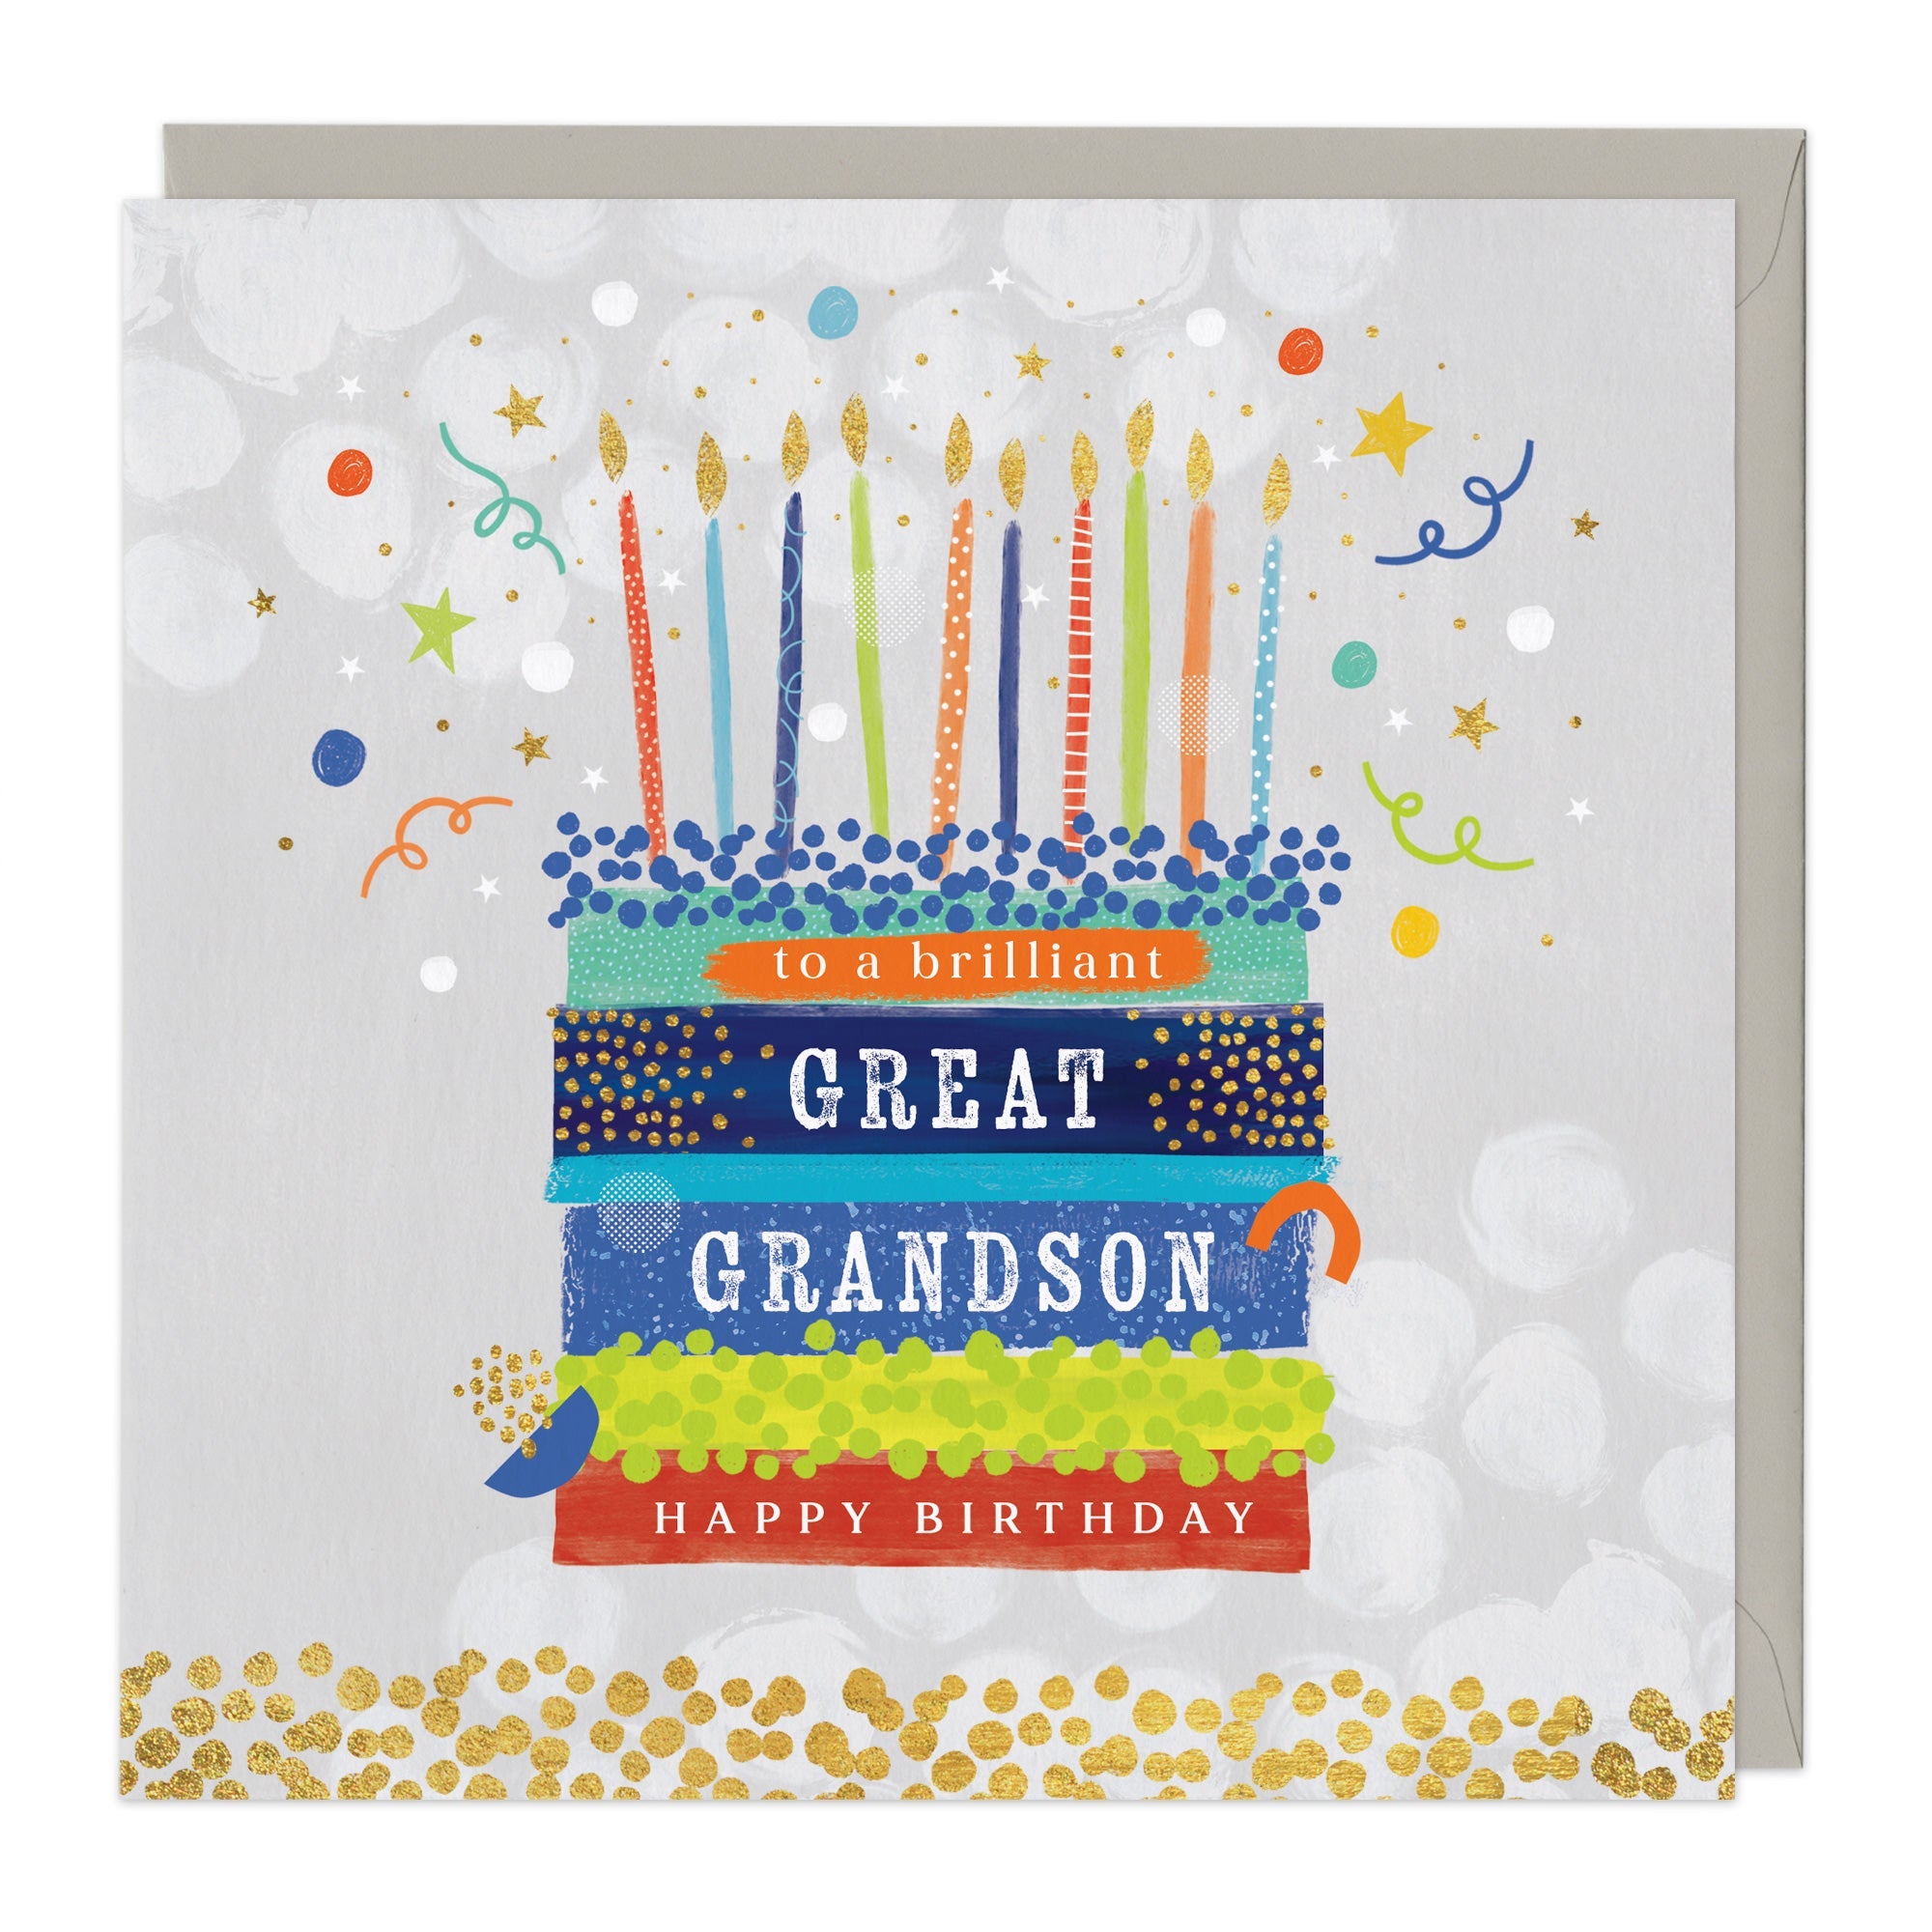 Great Grandson Cake Birthday Card